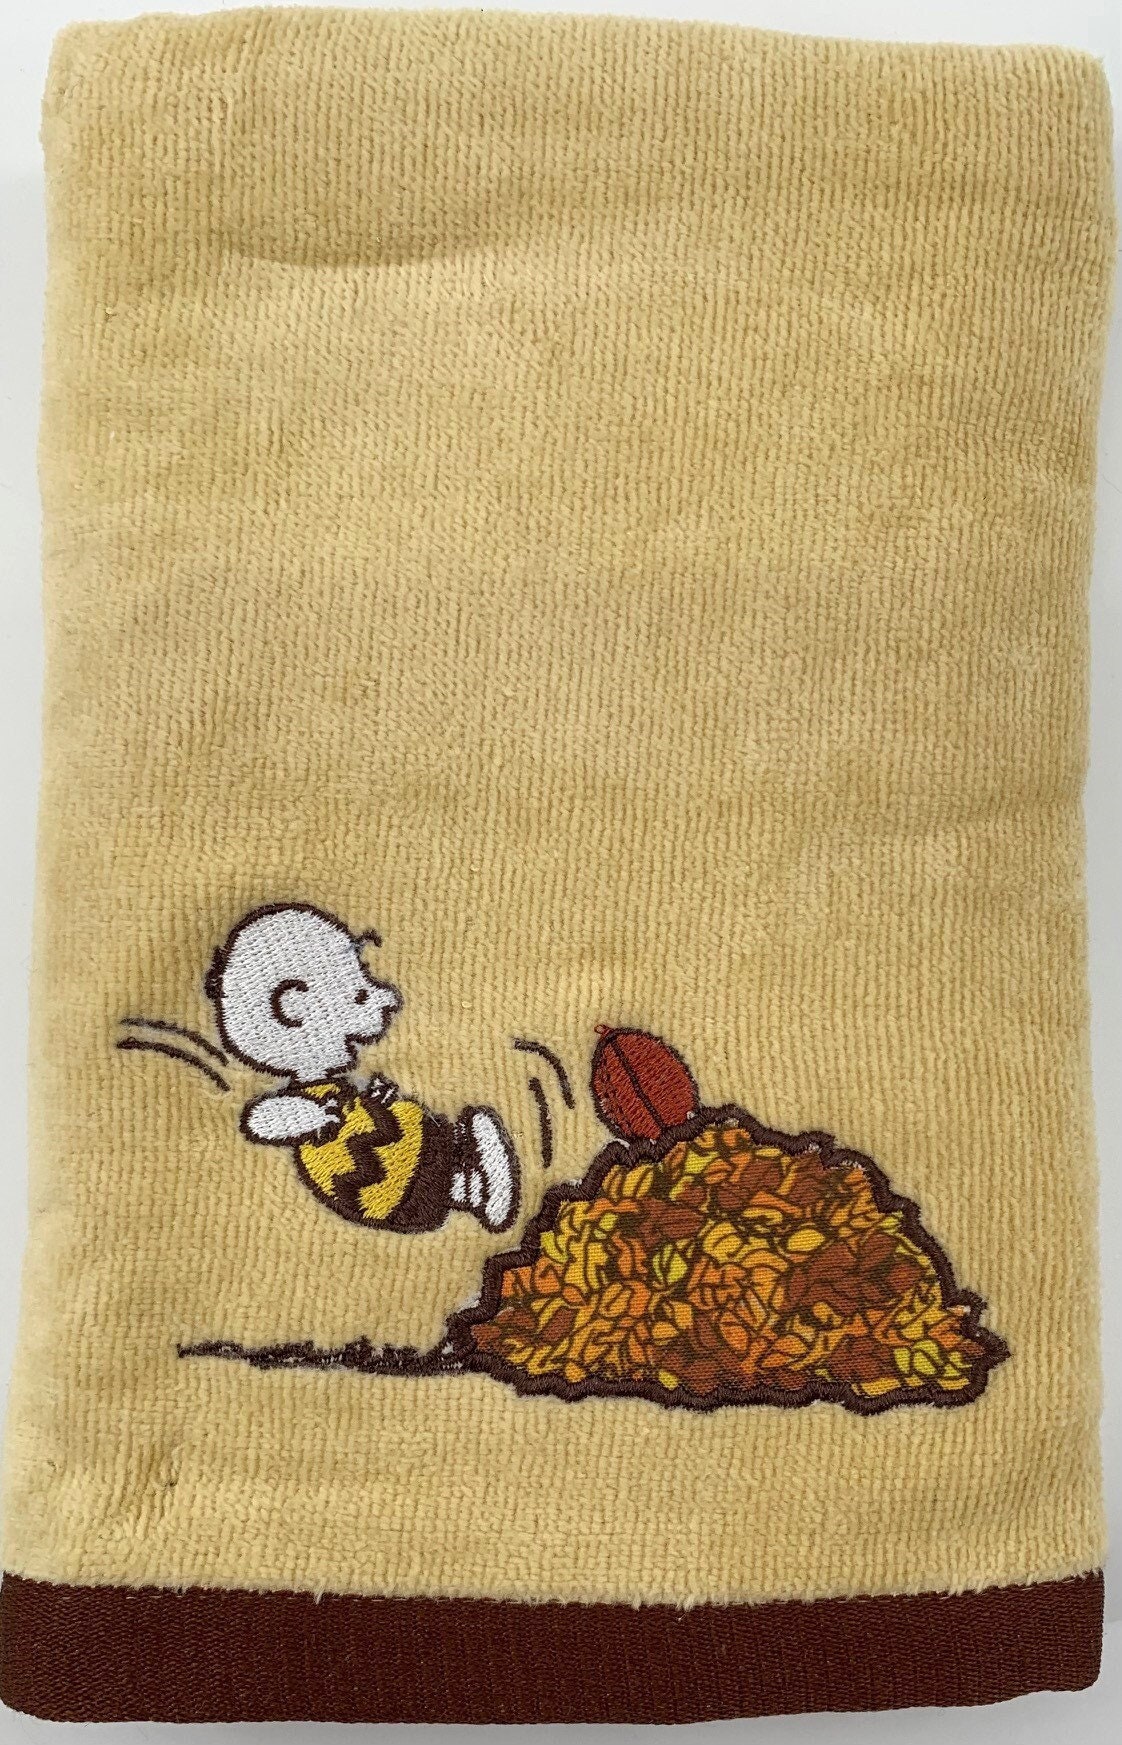 Peanuts, Bath, Peanuts 2 Pack Foot Ball Themed Terry Cloth Hand Towel